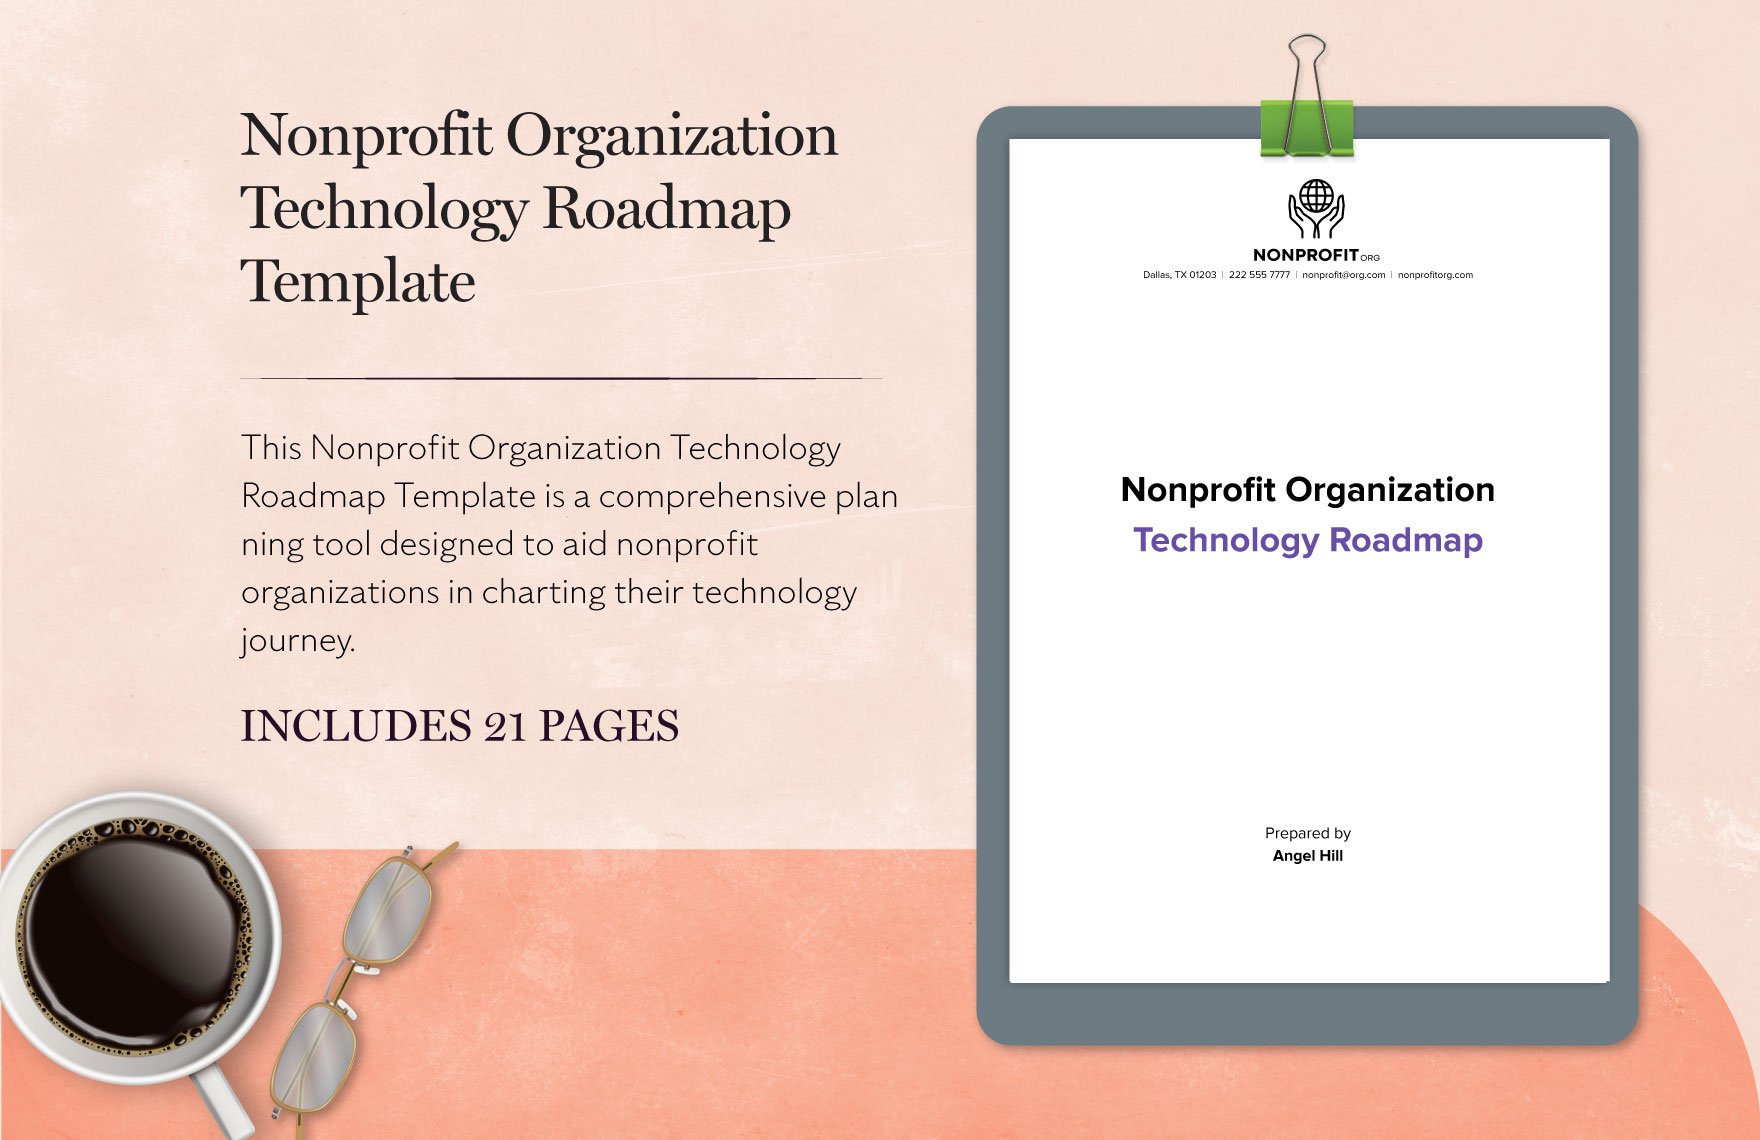 Nonprofit Organization Technology Roadmap Template in Word, Google Docs, PDF